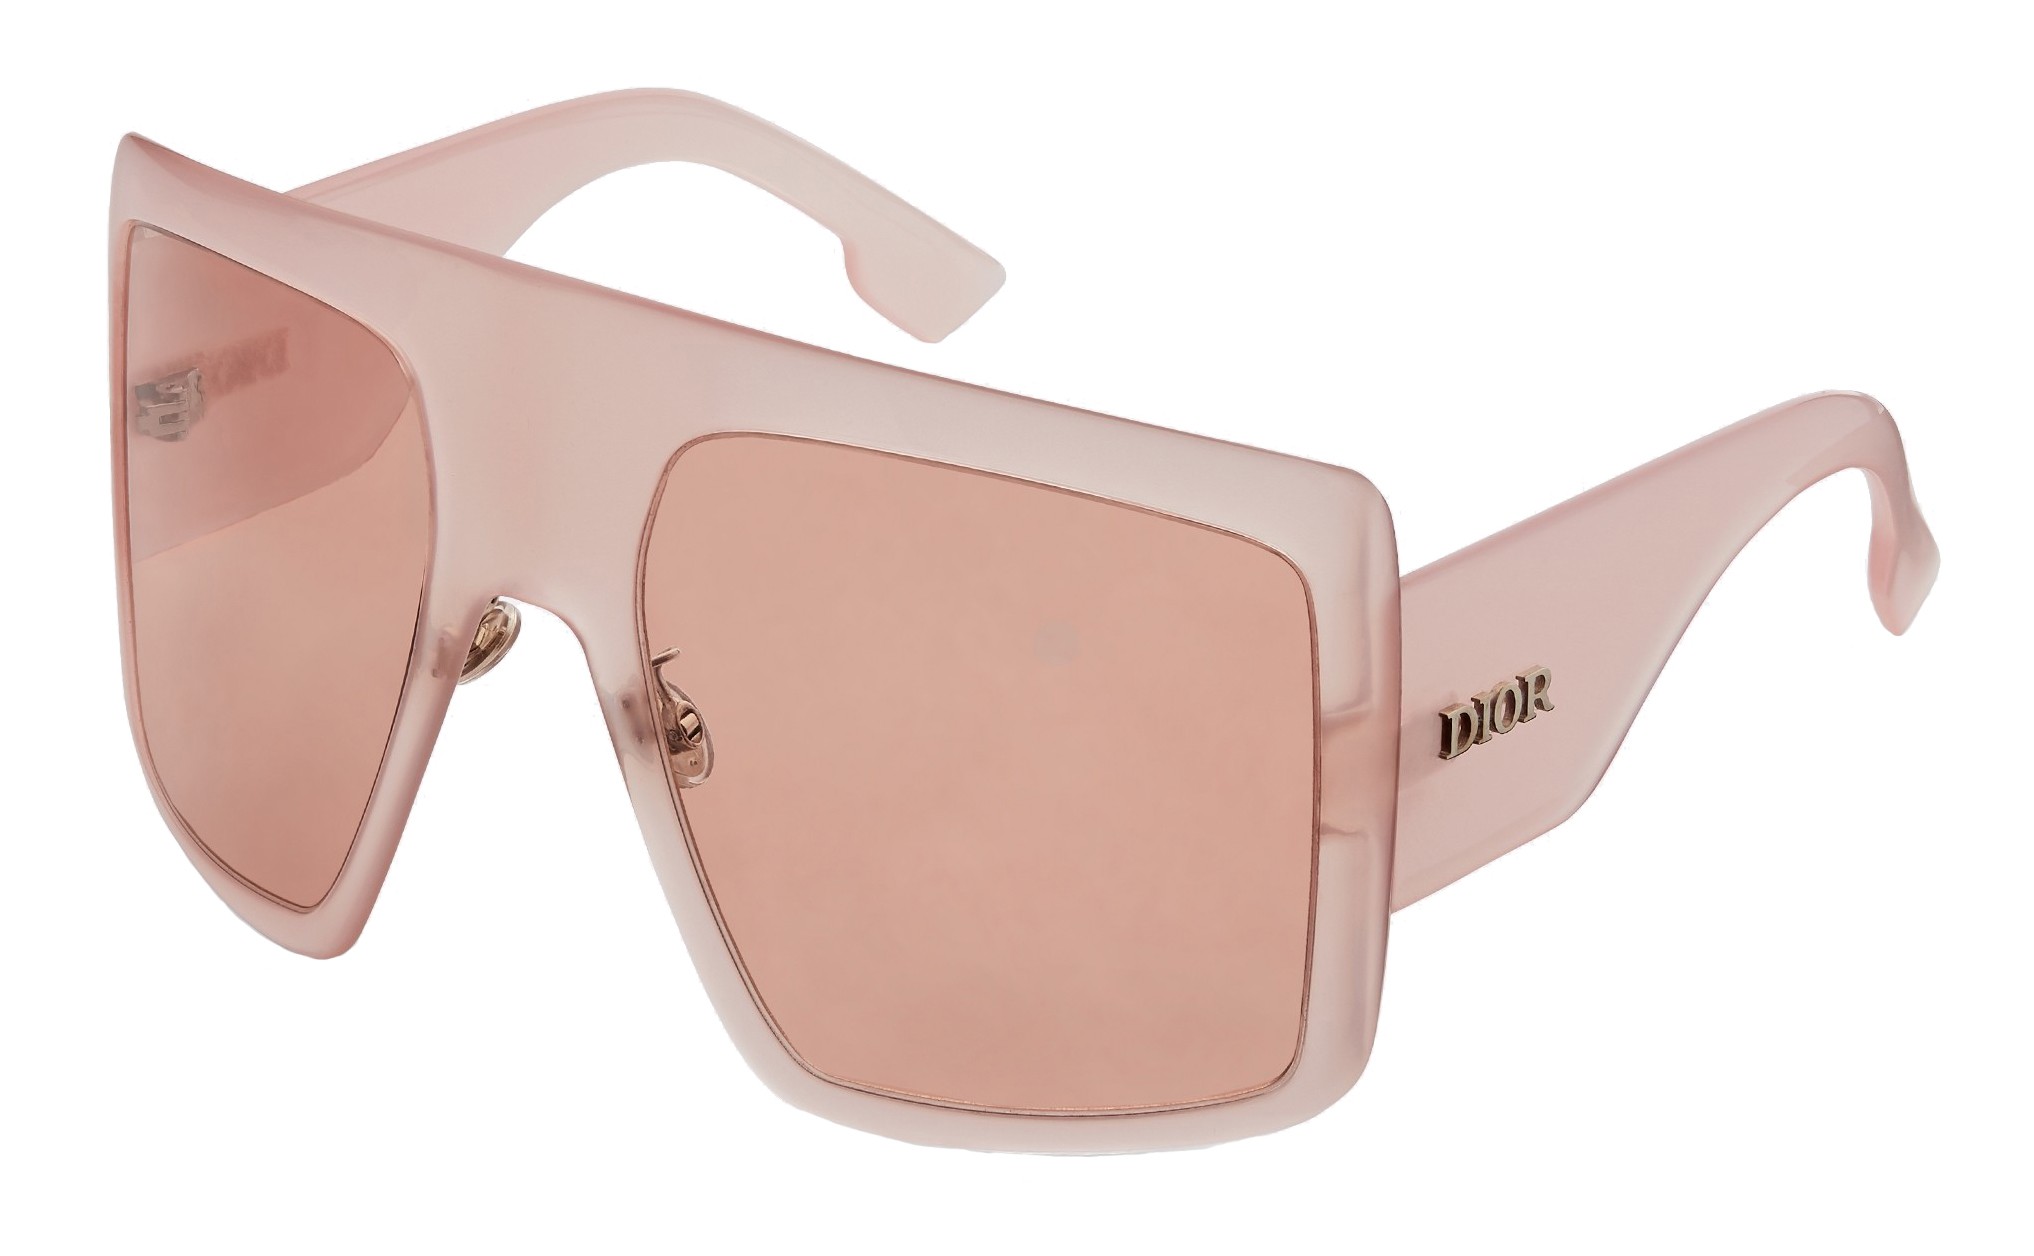 Dior - Sunglasses - DiorSoLight1 - Pink 